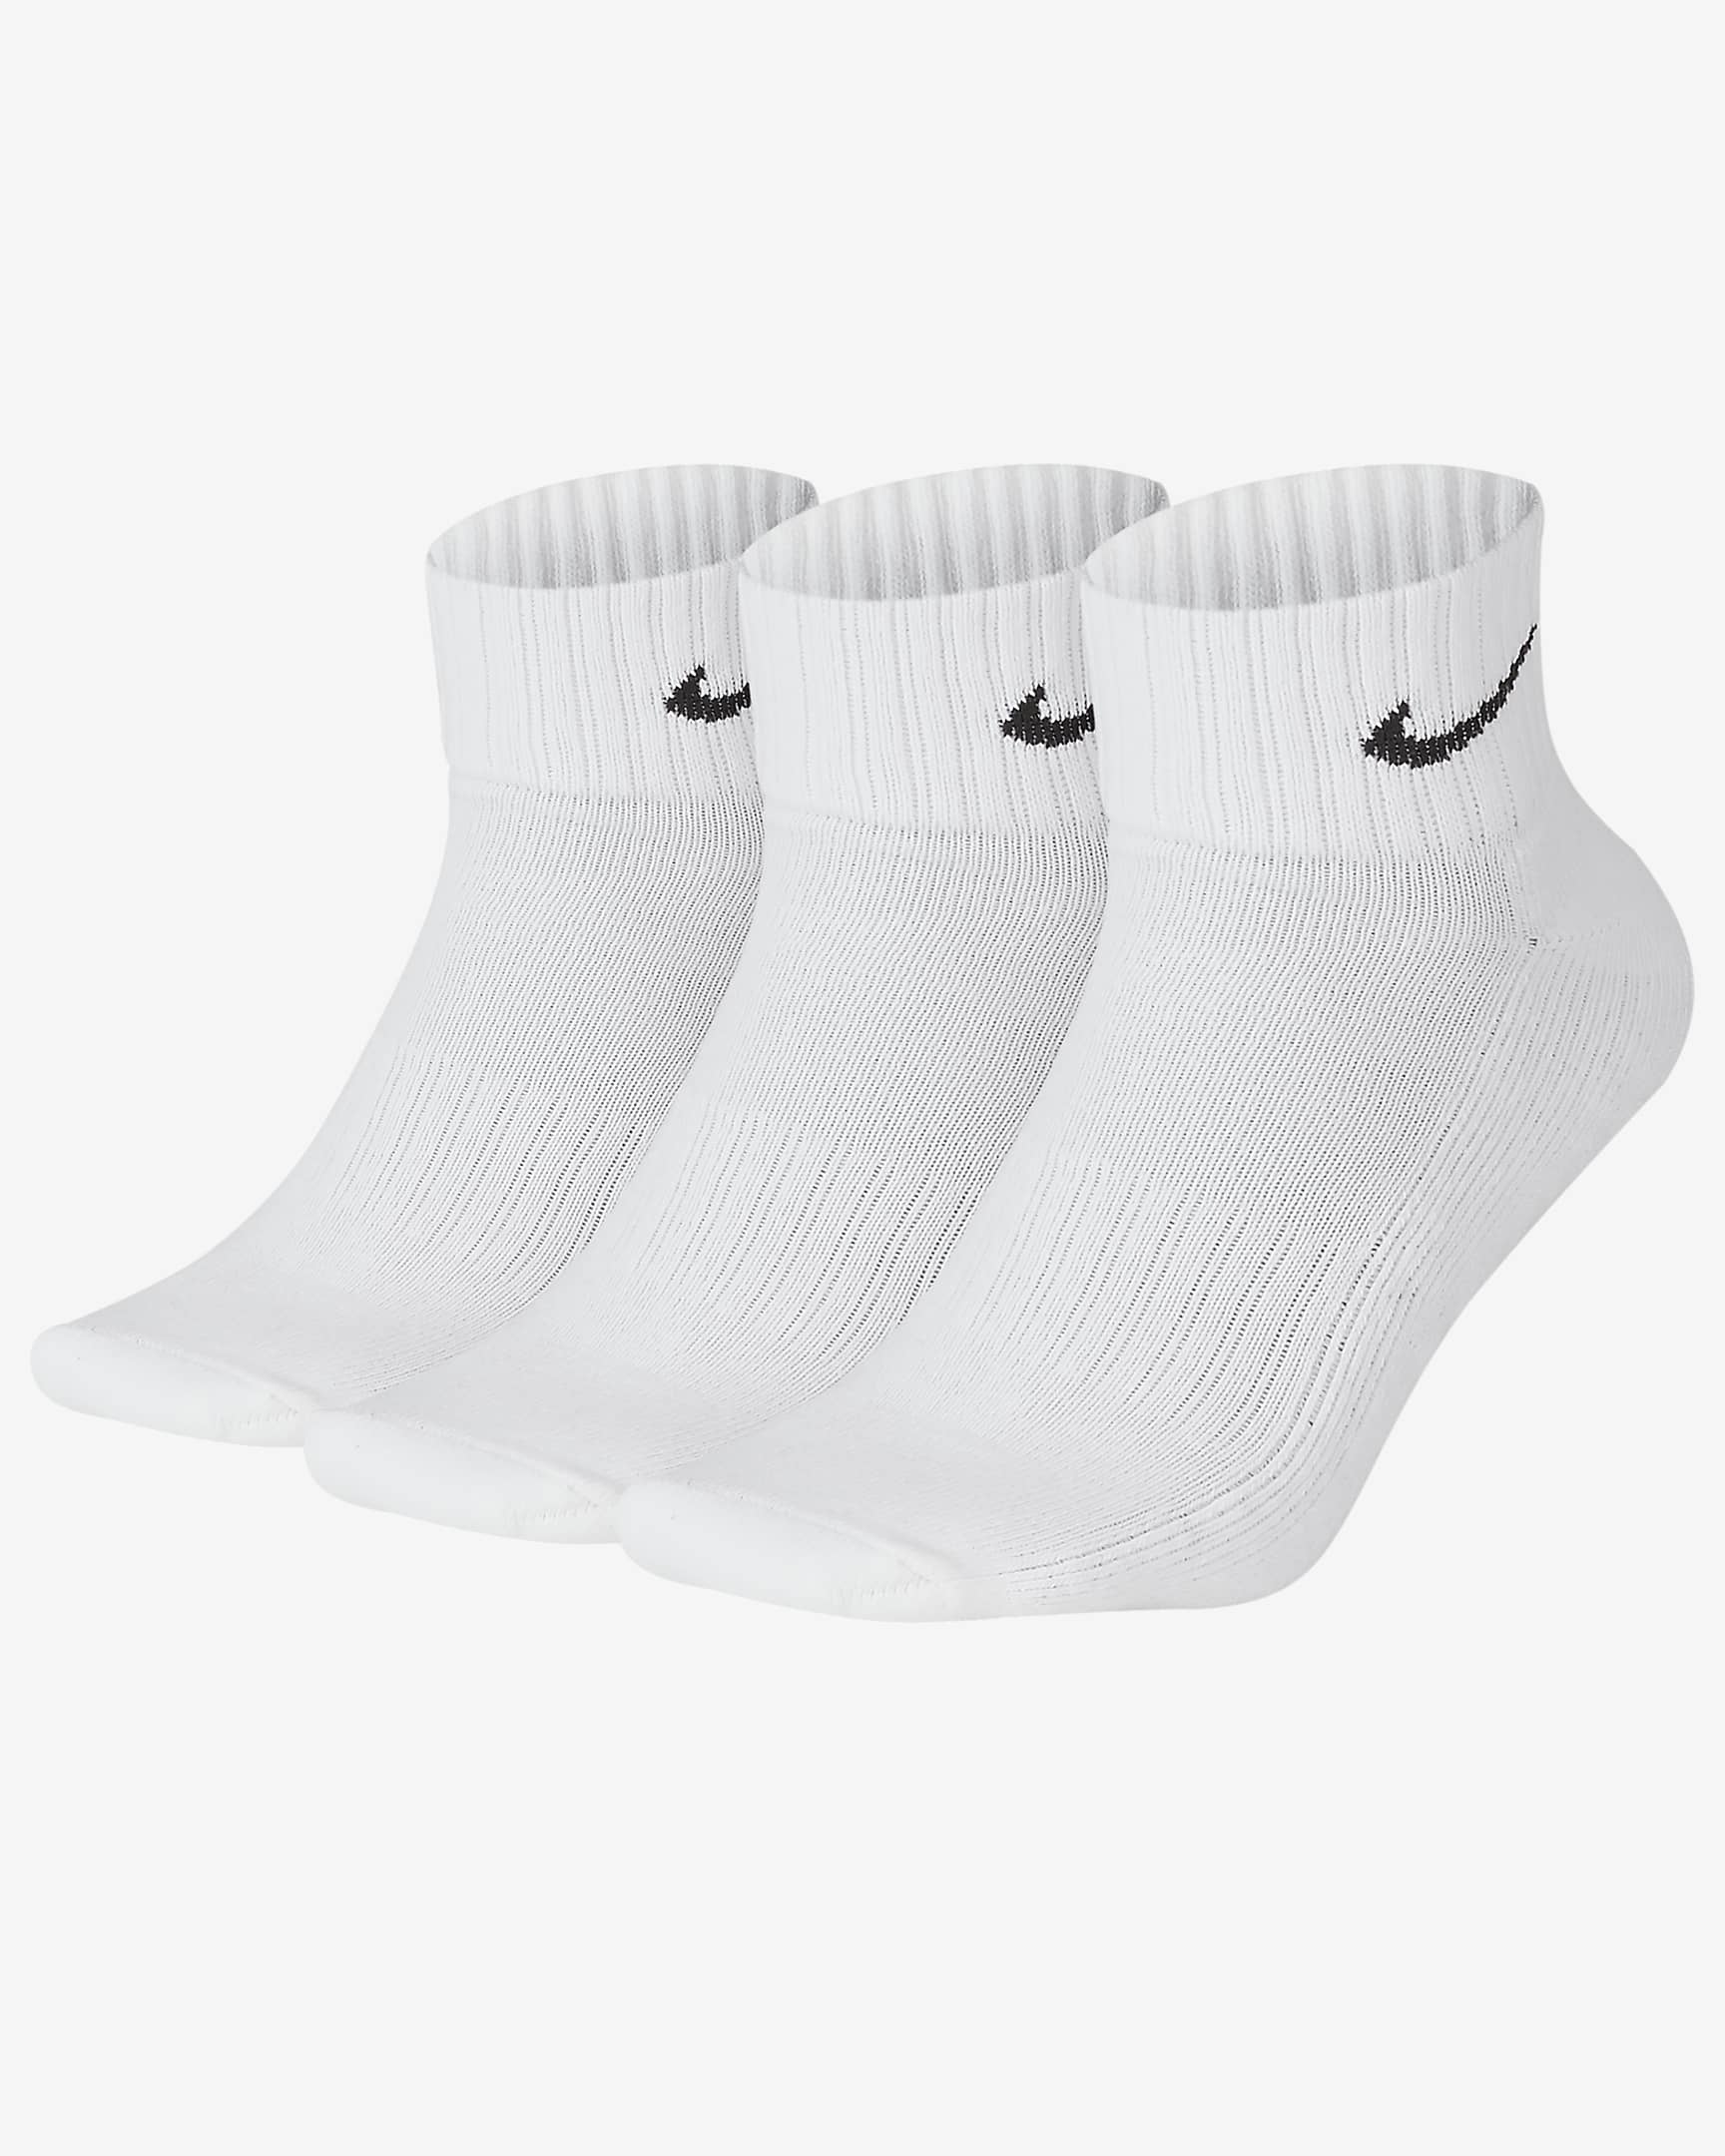 Nike gepolsterte Knöchelsocken (3 Paar) - Weiß/Schwarz